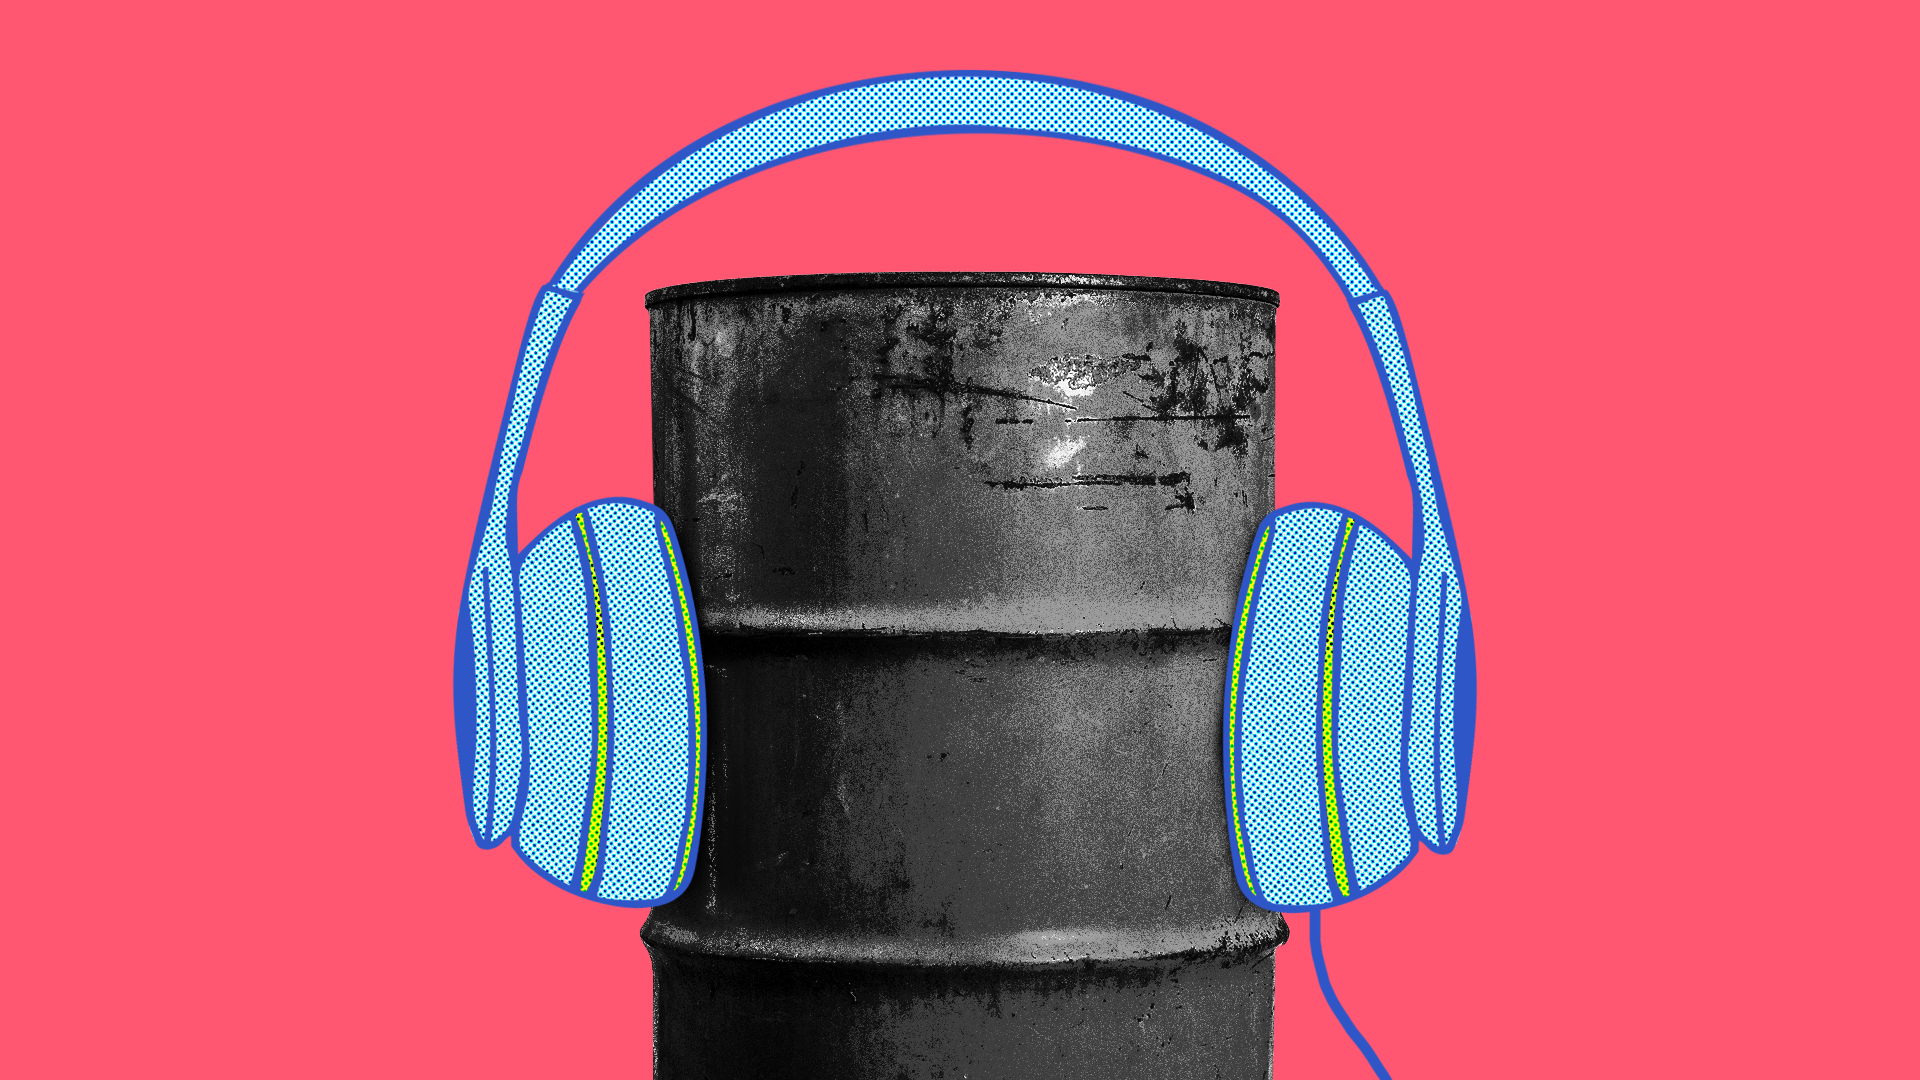 An oil barrel wearing headphones